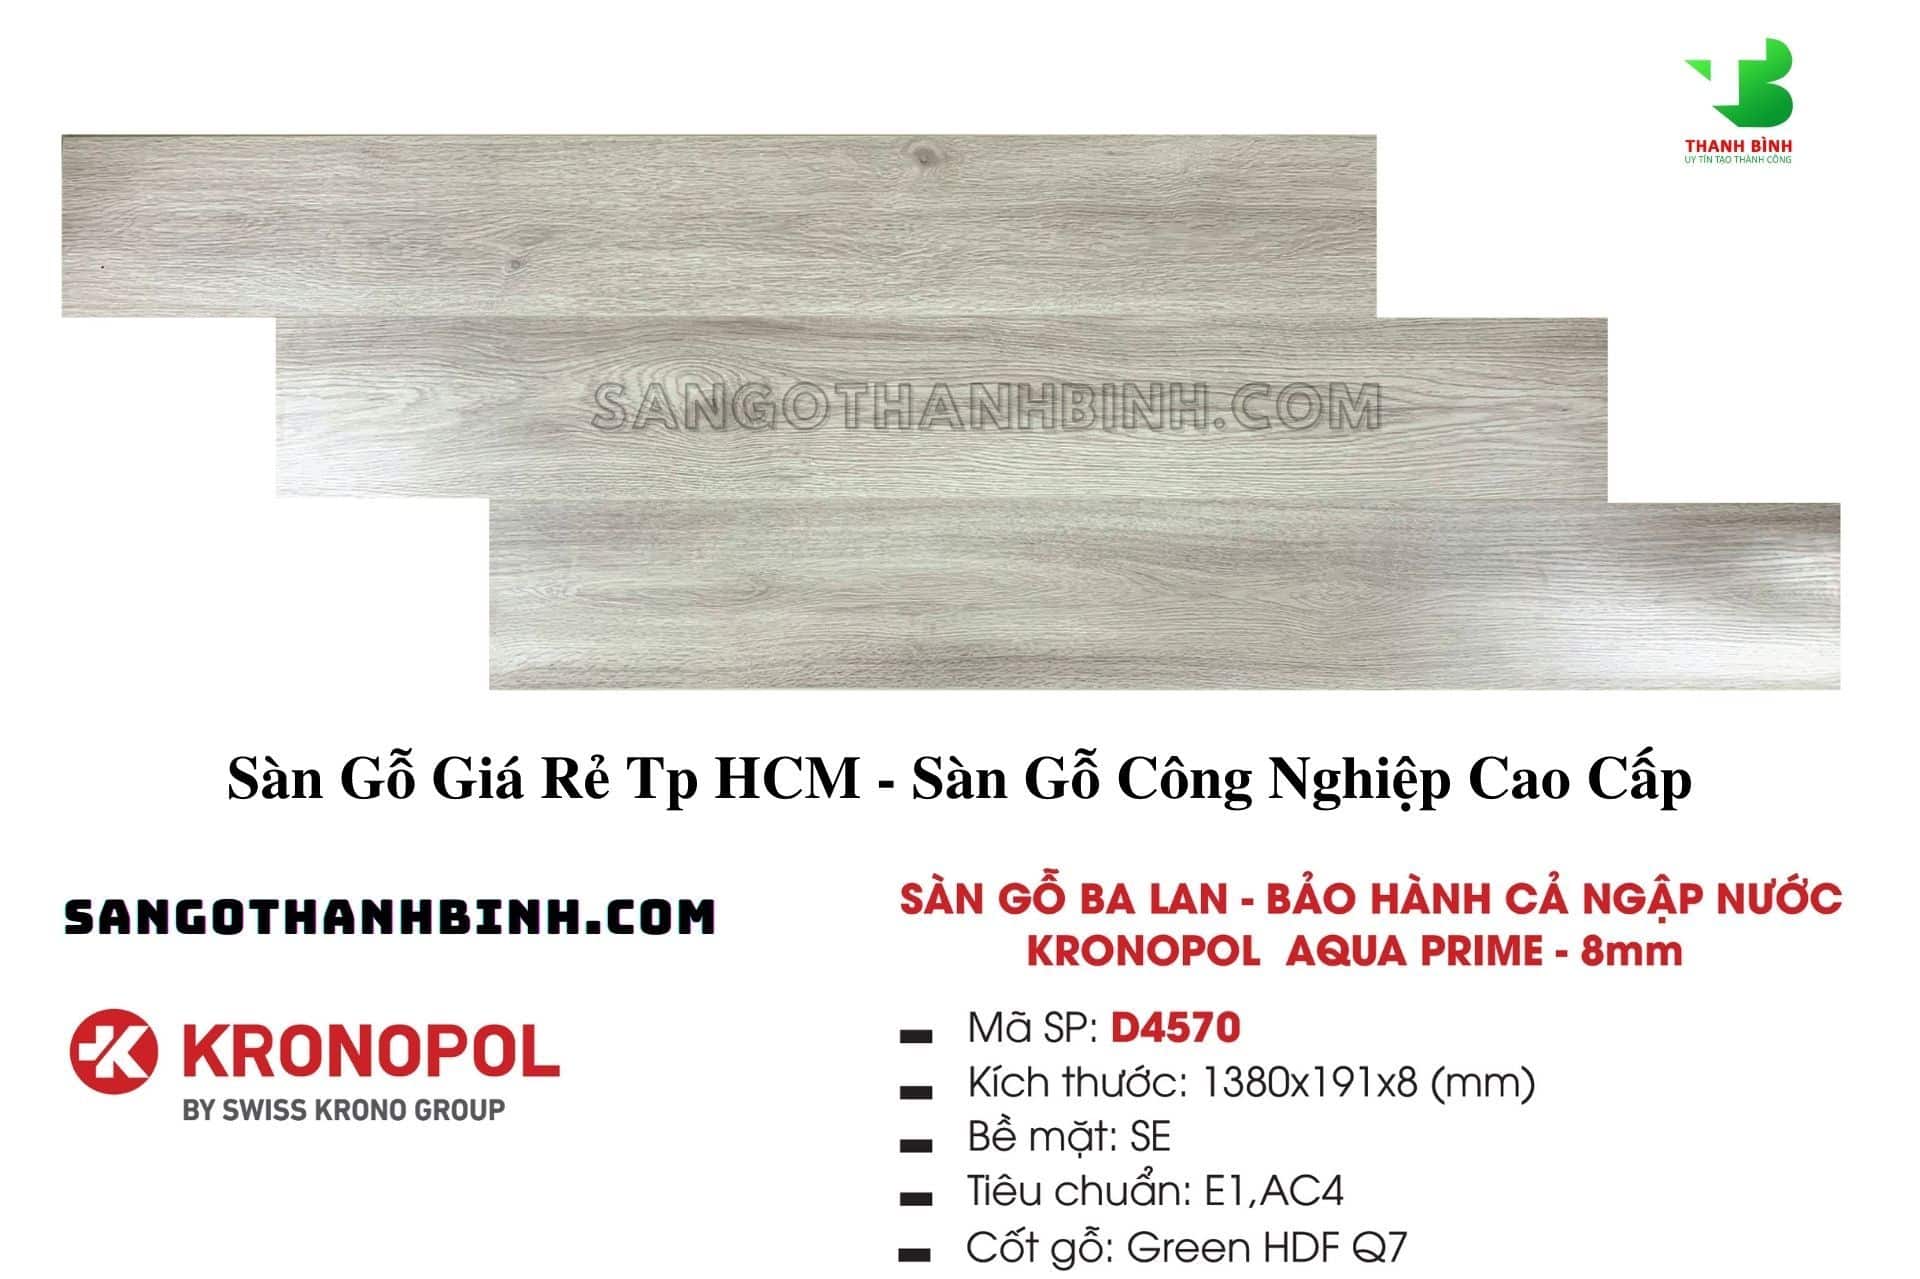 San Go Kronopol Ba Lan Aqua Prime 8mm Ma D45703